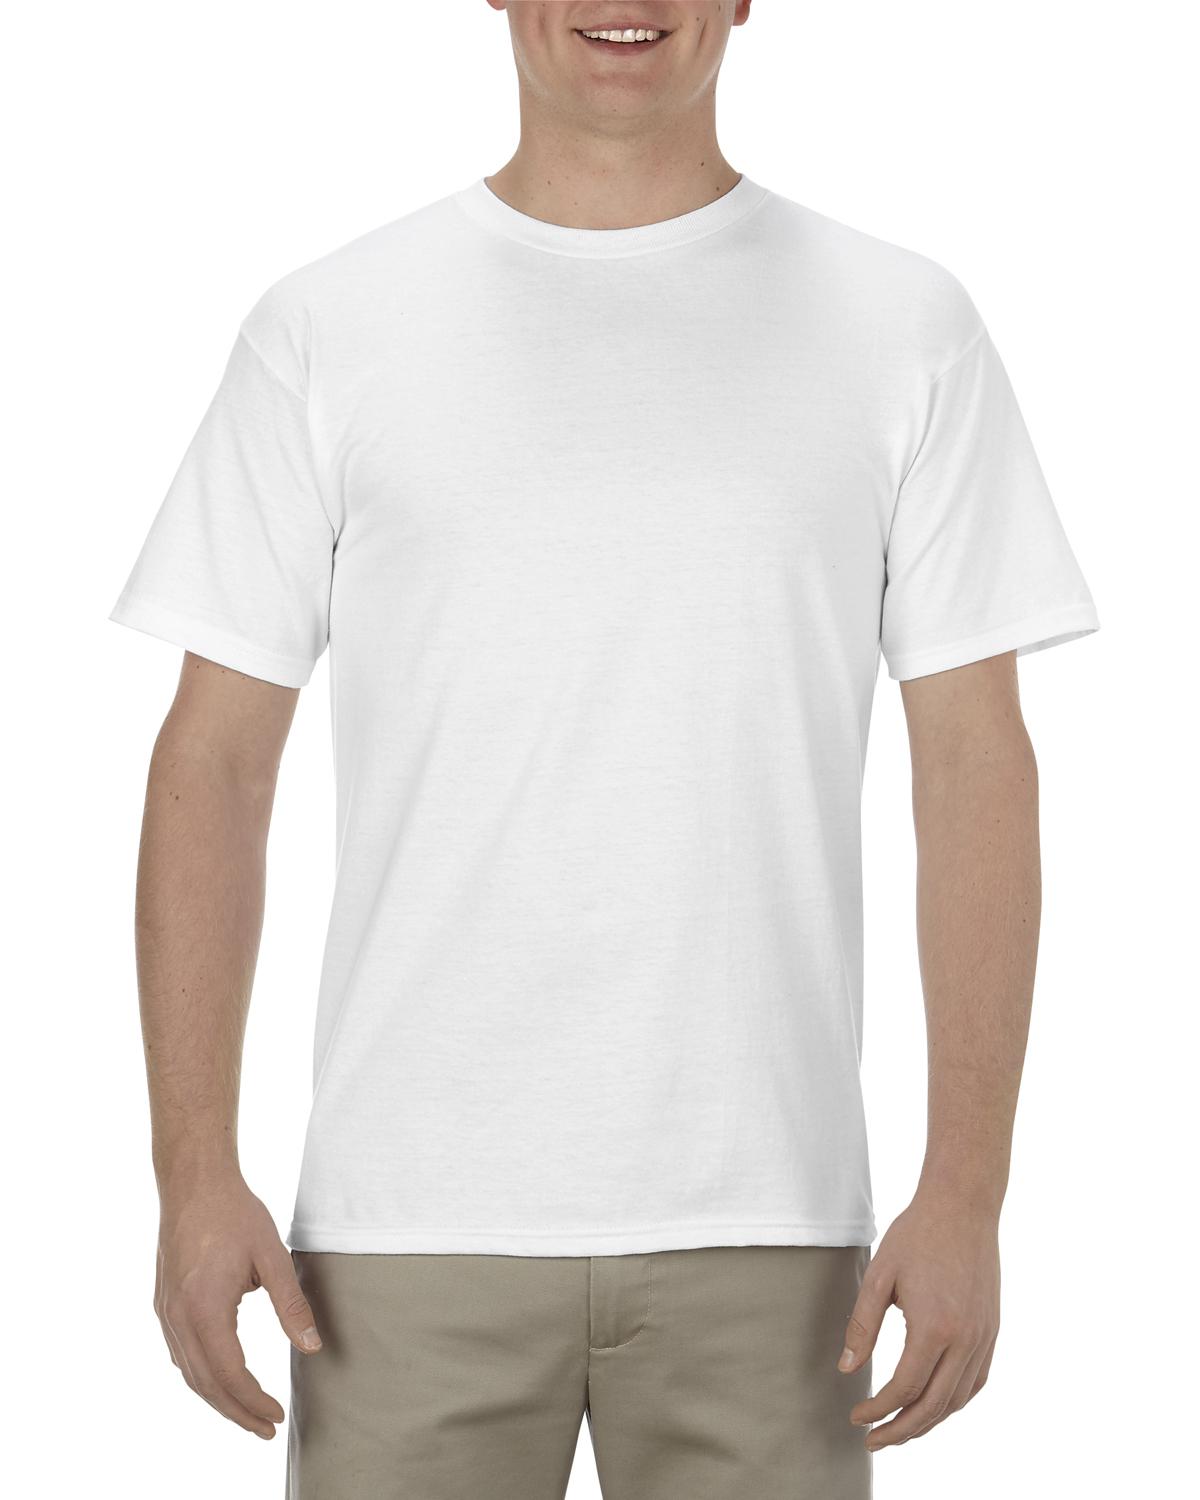 Alstyle AL1701 Adult 5.5 oz. 100% Soft Spun Cotton T-Shirt - Shirtmax